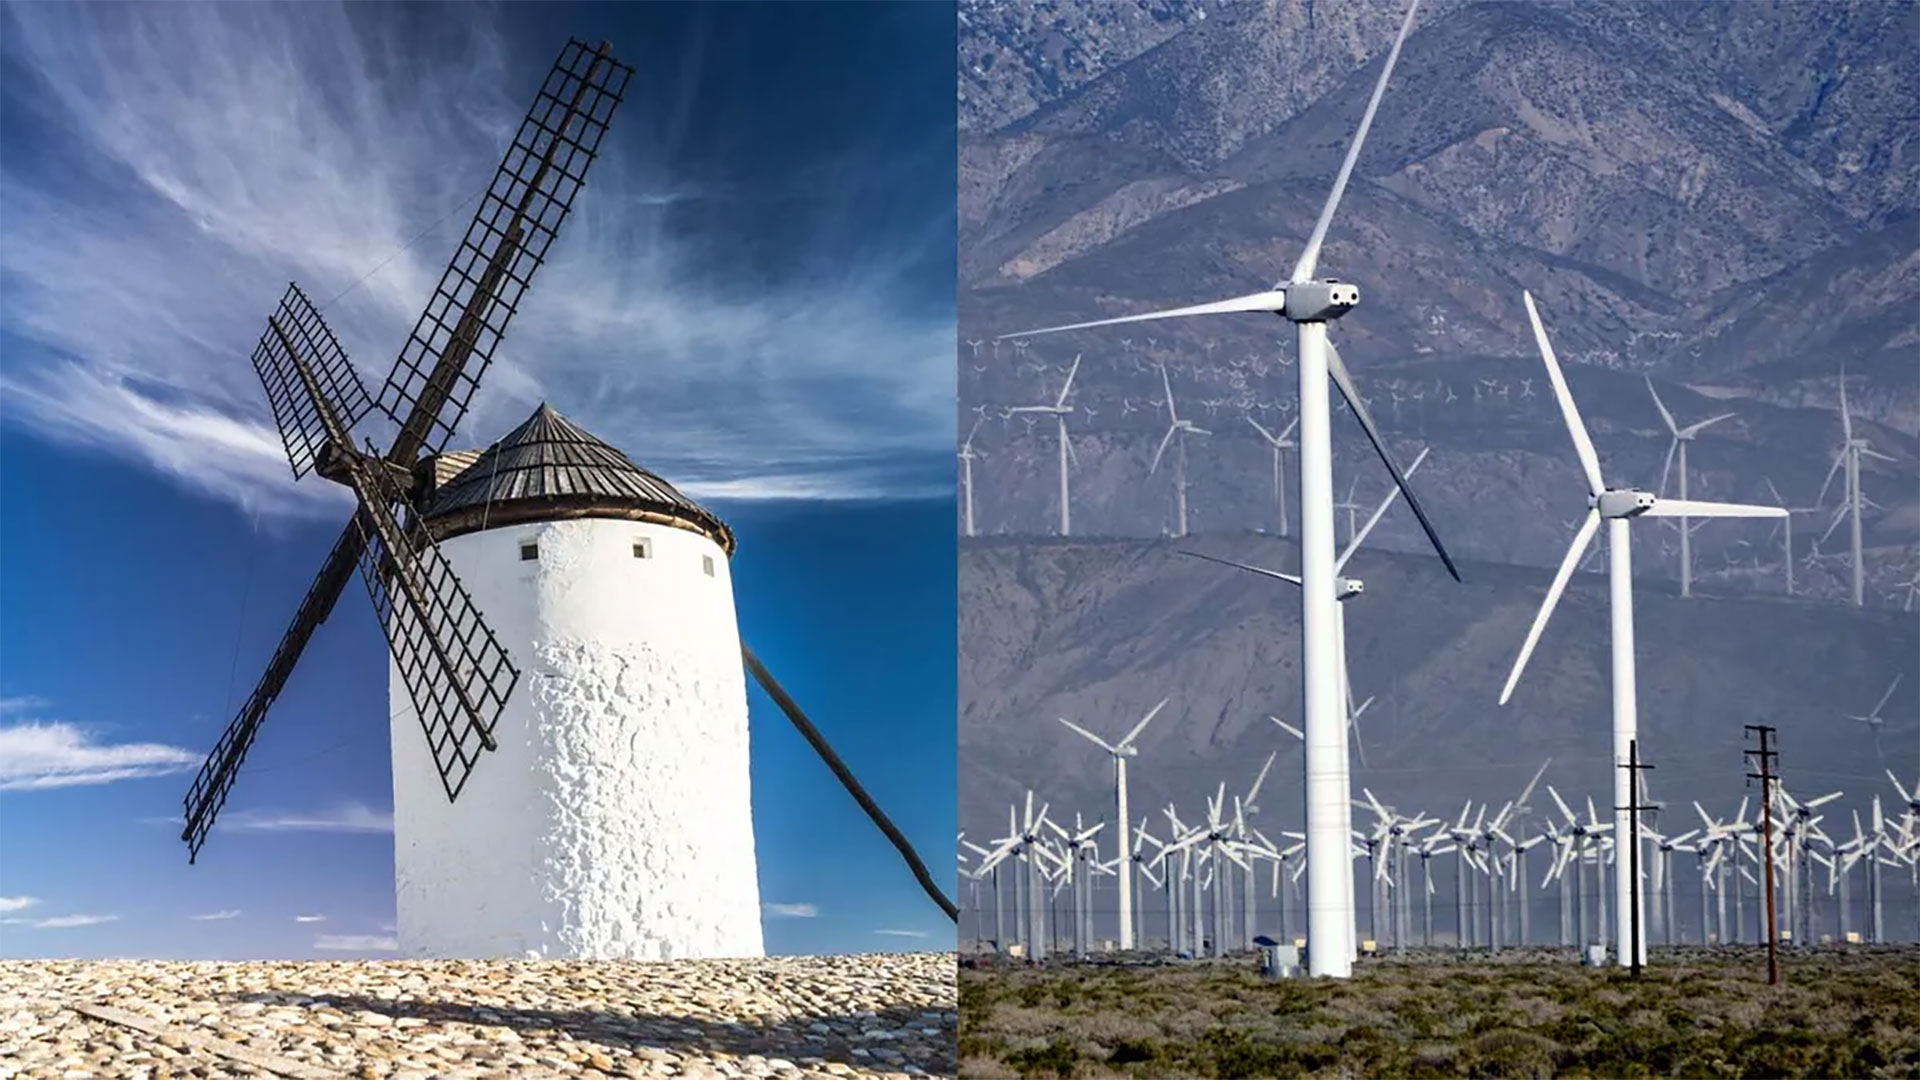 Medieval Windmills to Turbines